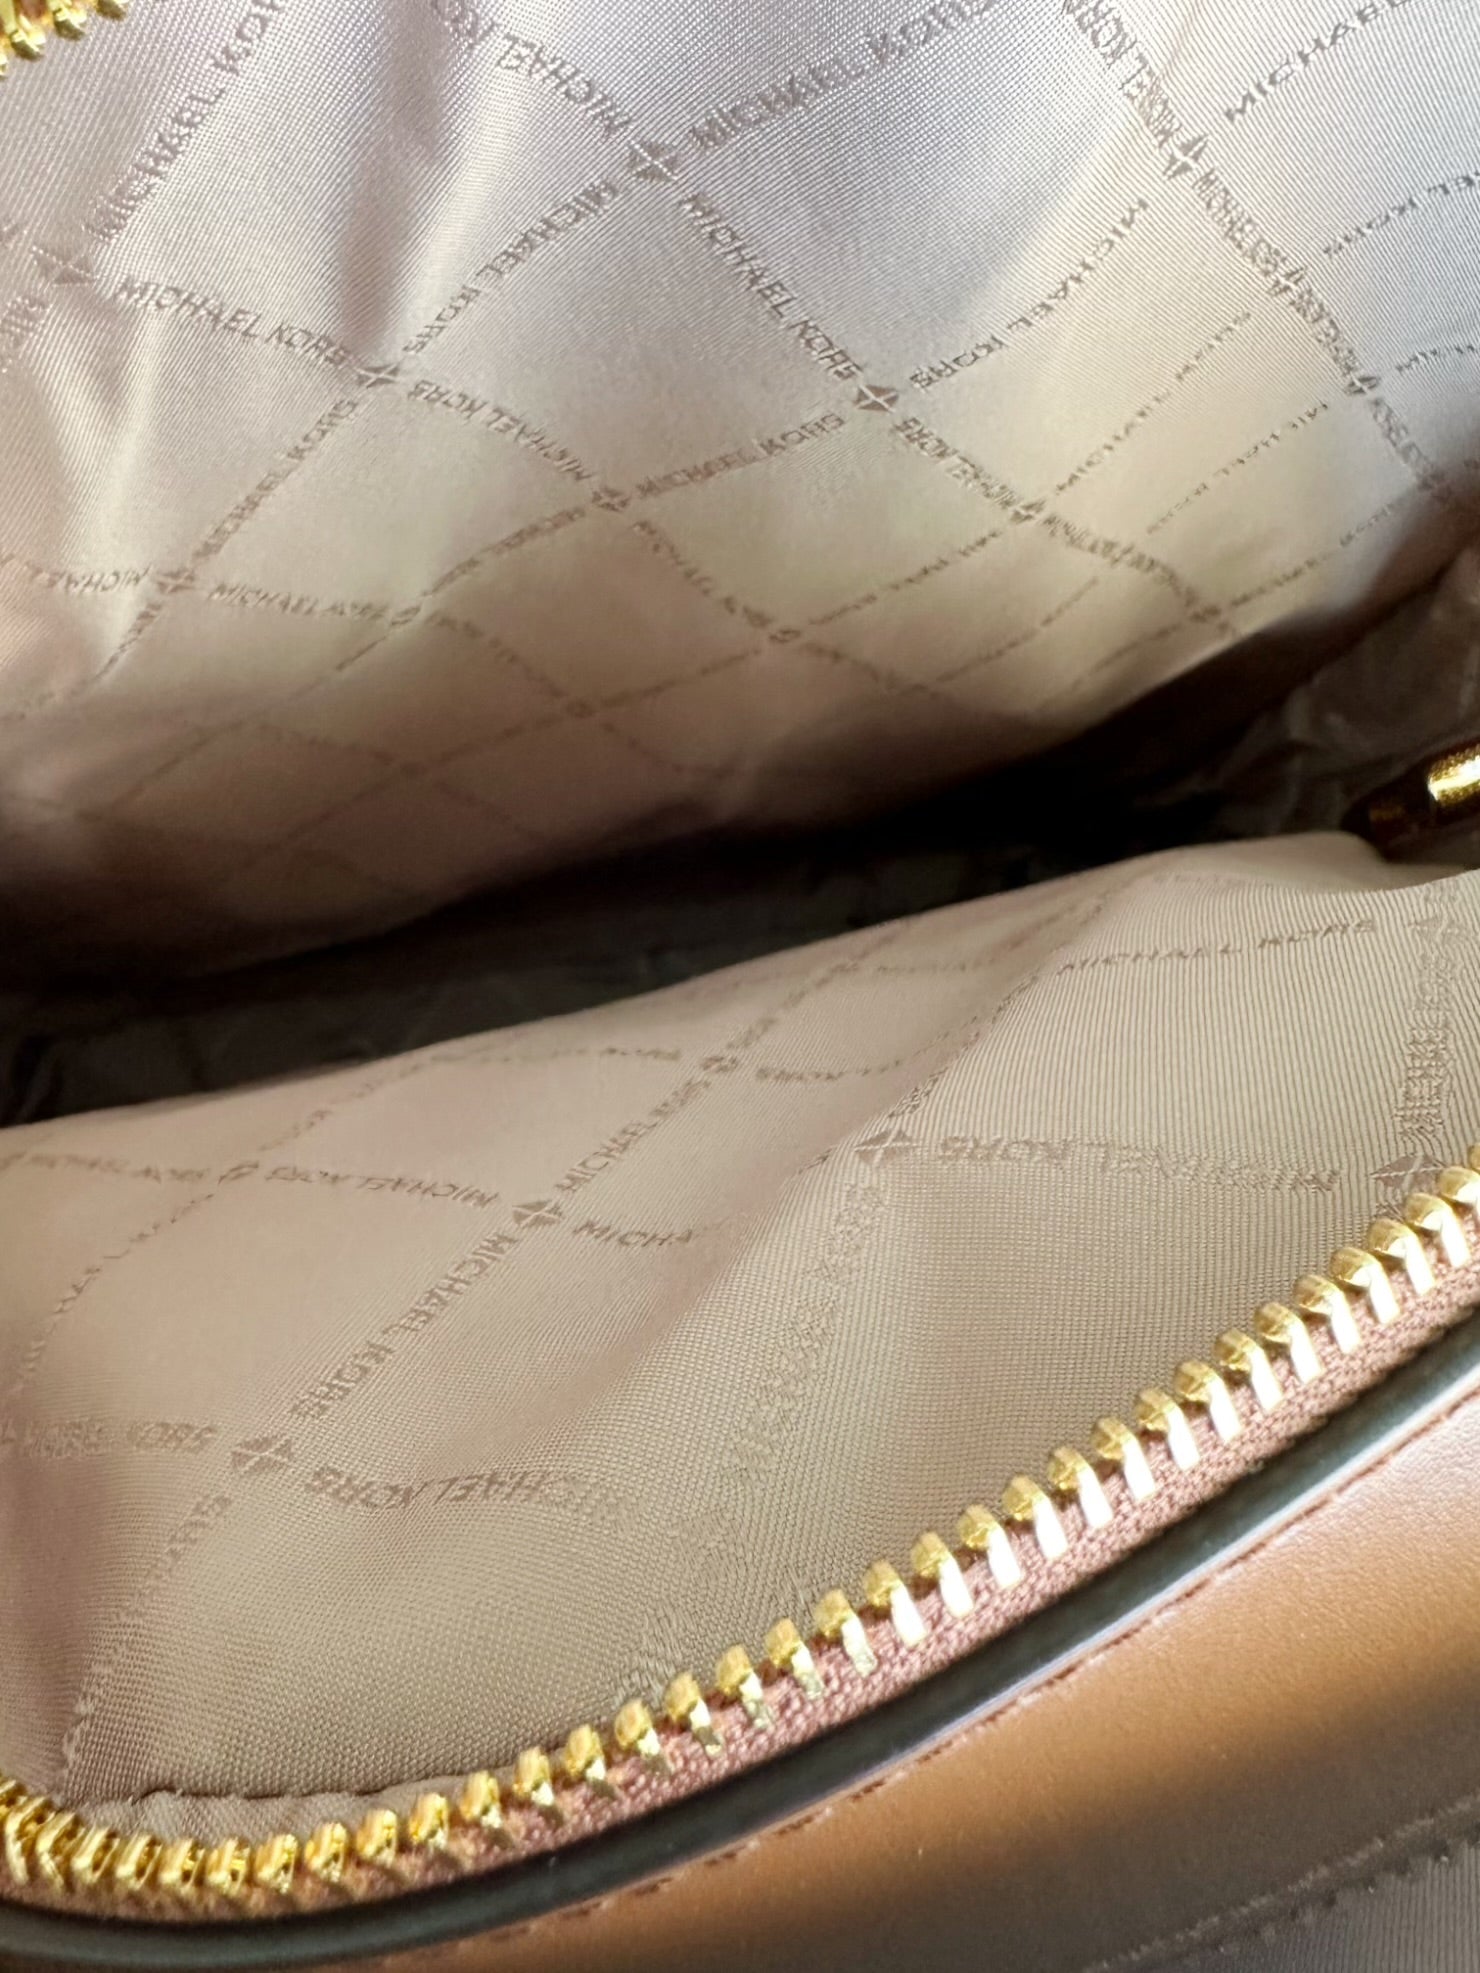 Michael Kors Jaycee Large Backpack Black Pebbled Leather – Gaby's Bags